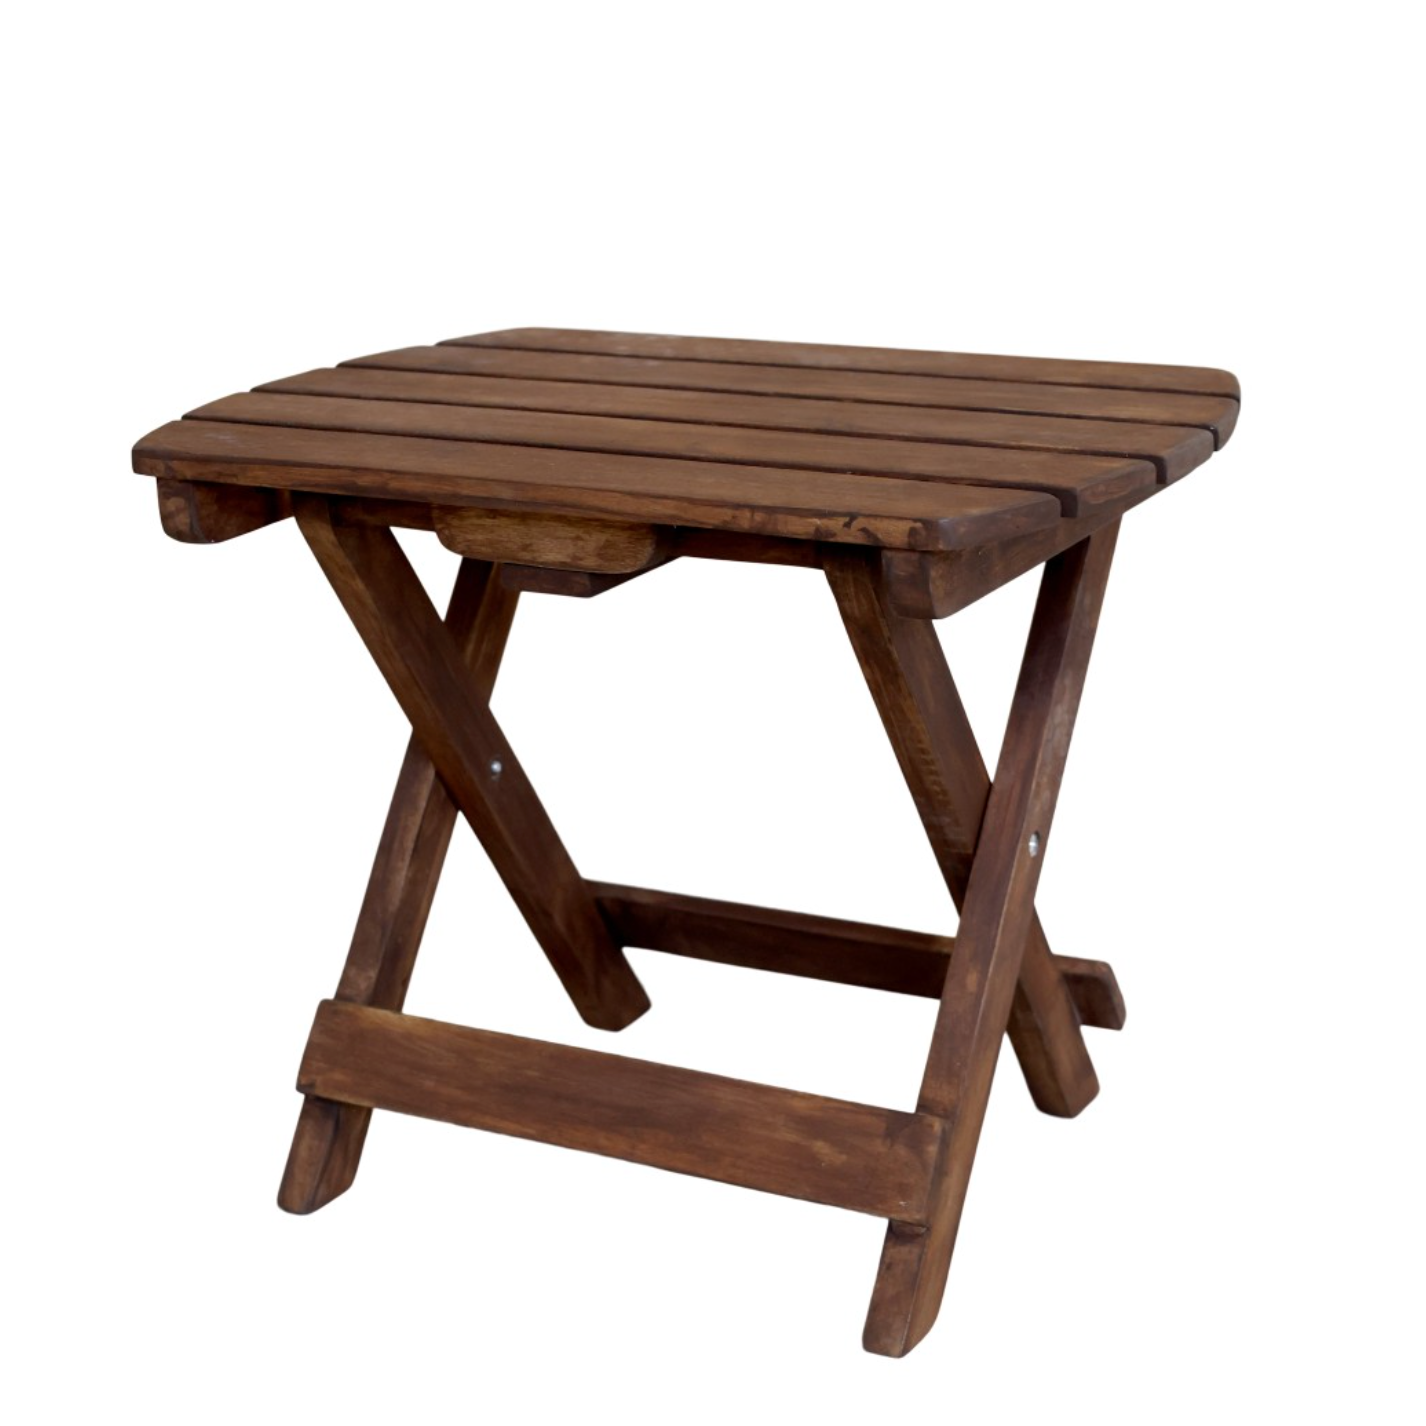 Wooden Garden side table